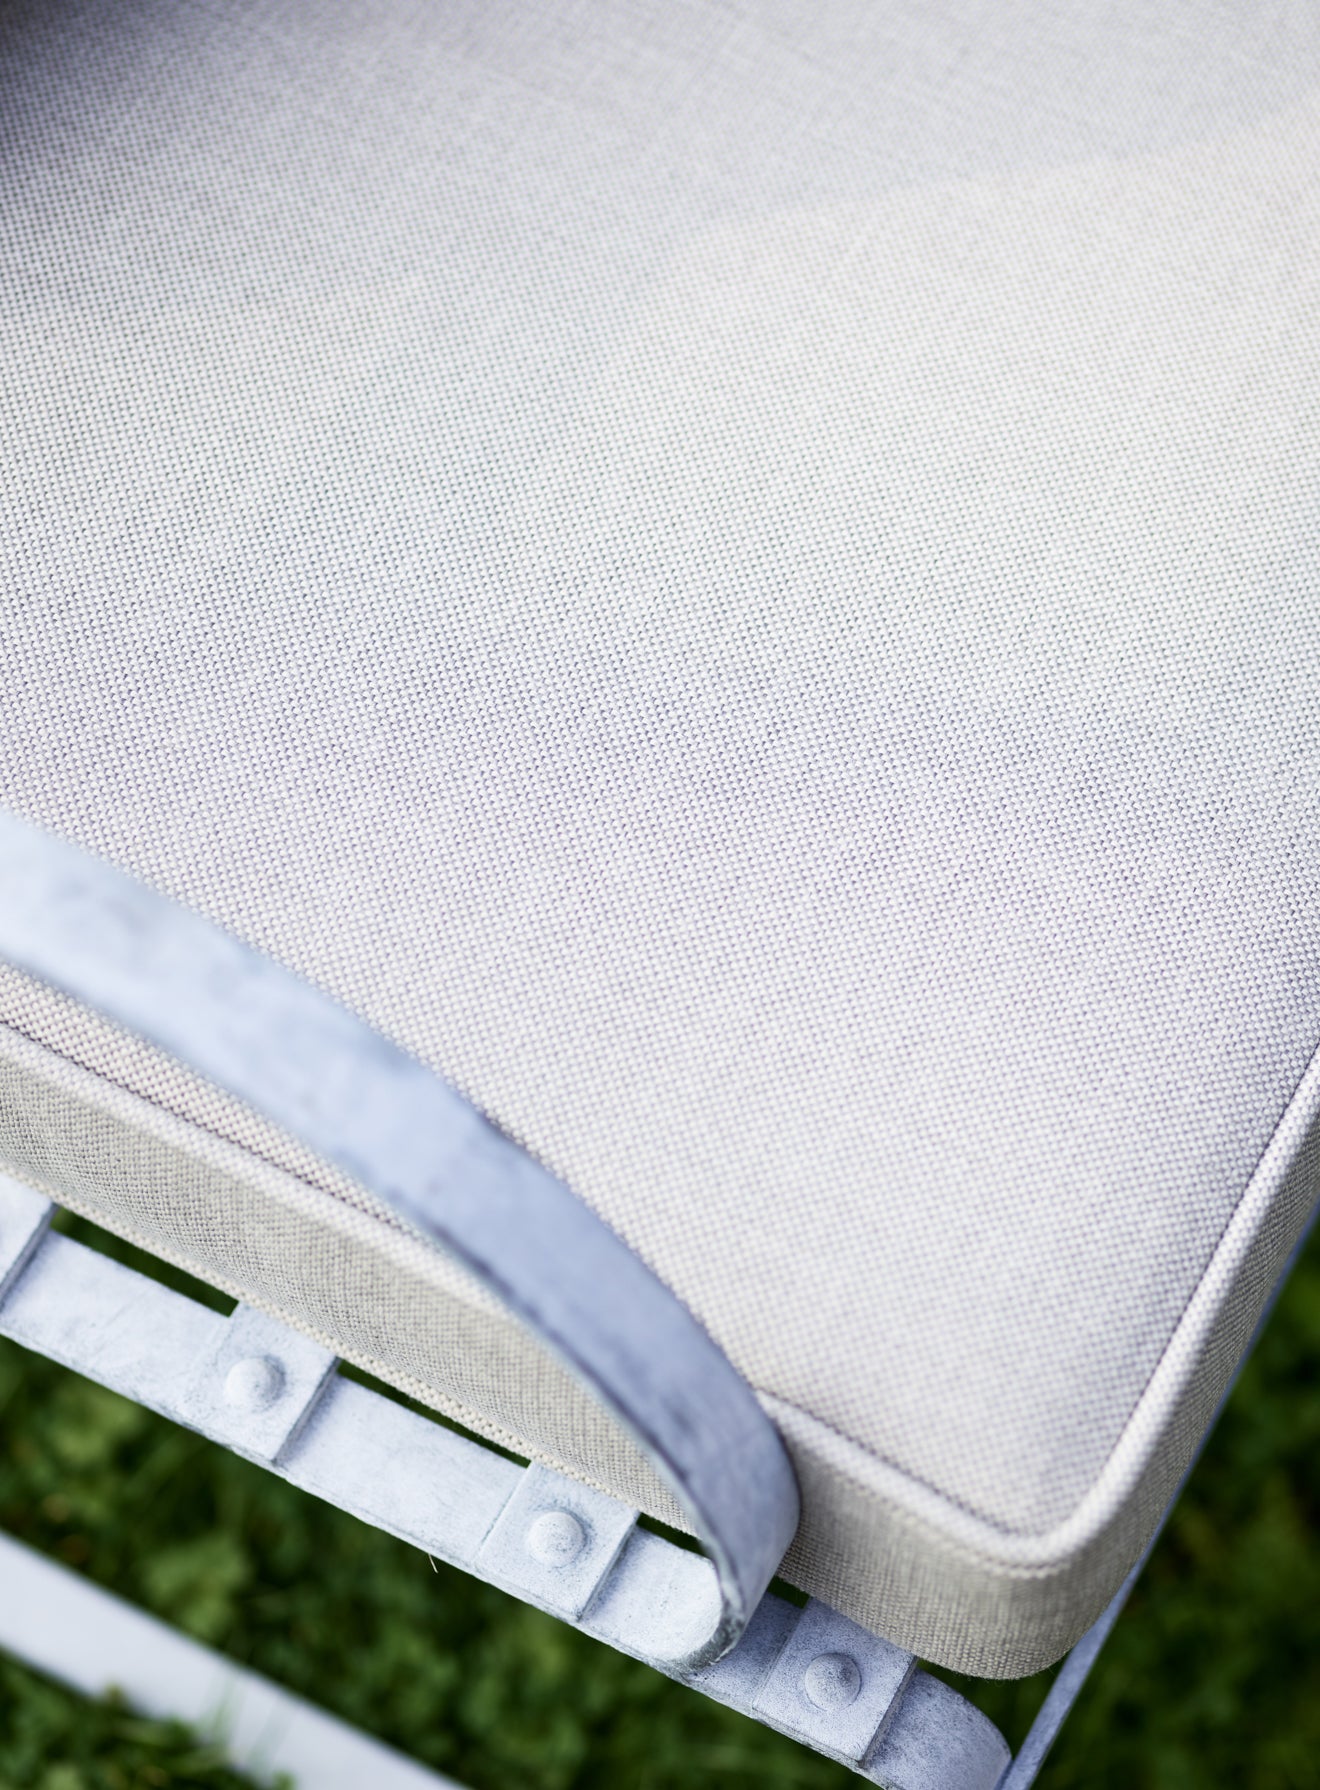 Sudbury Garden Furniture Cushion, Soft Grey